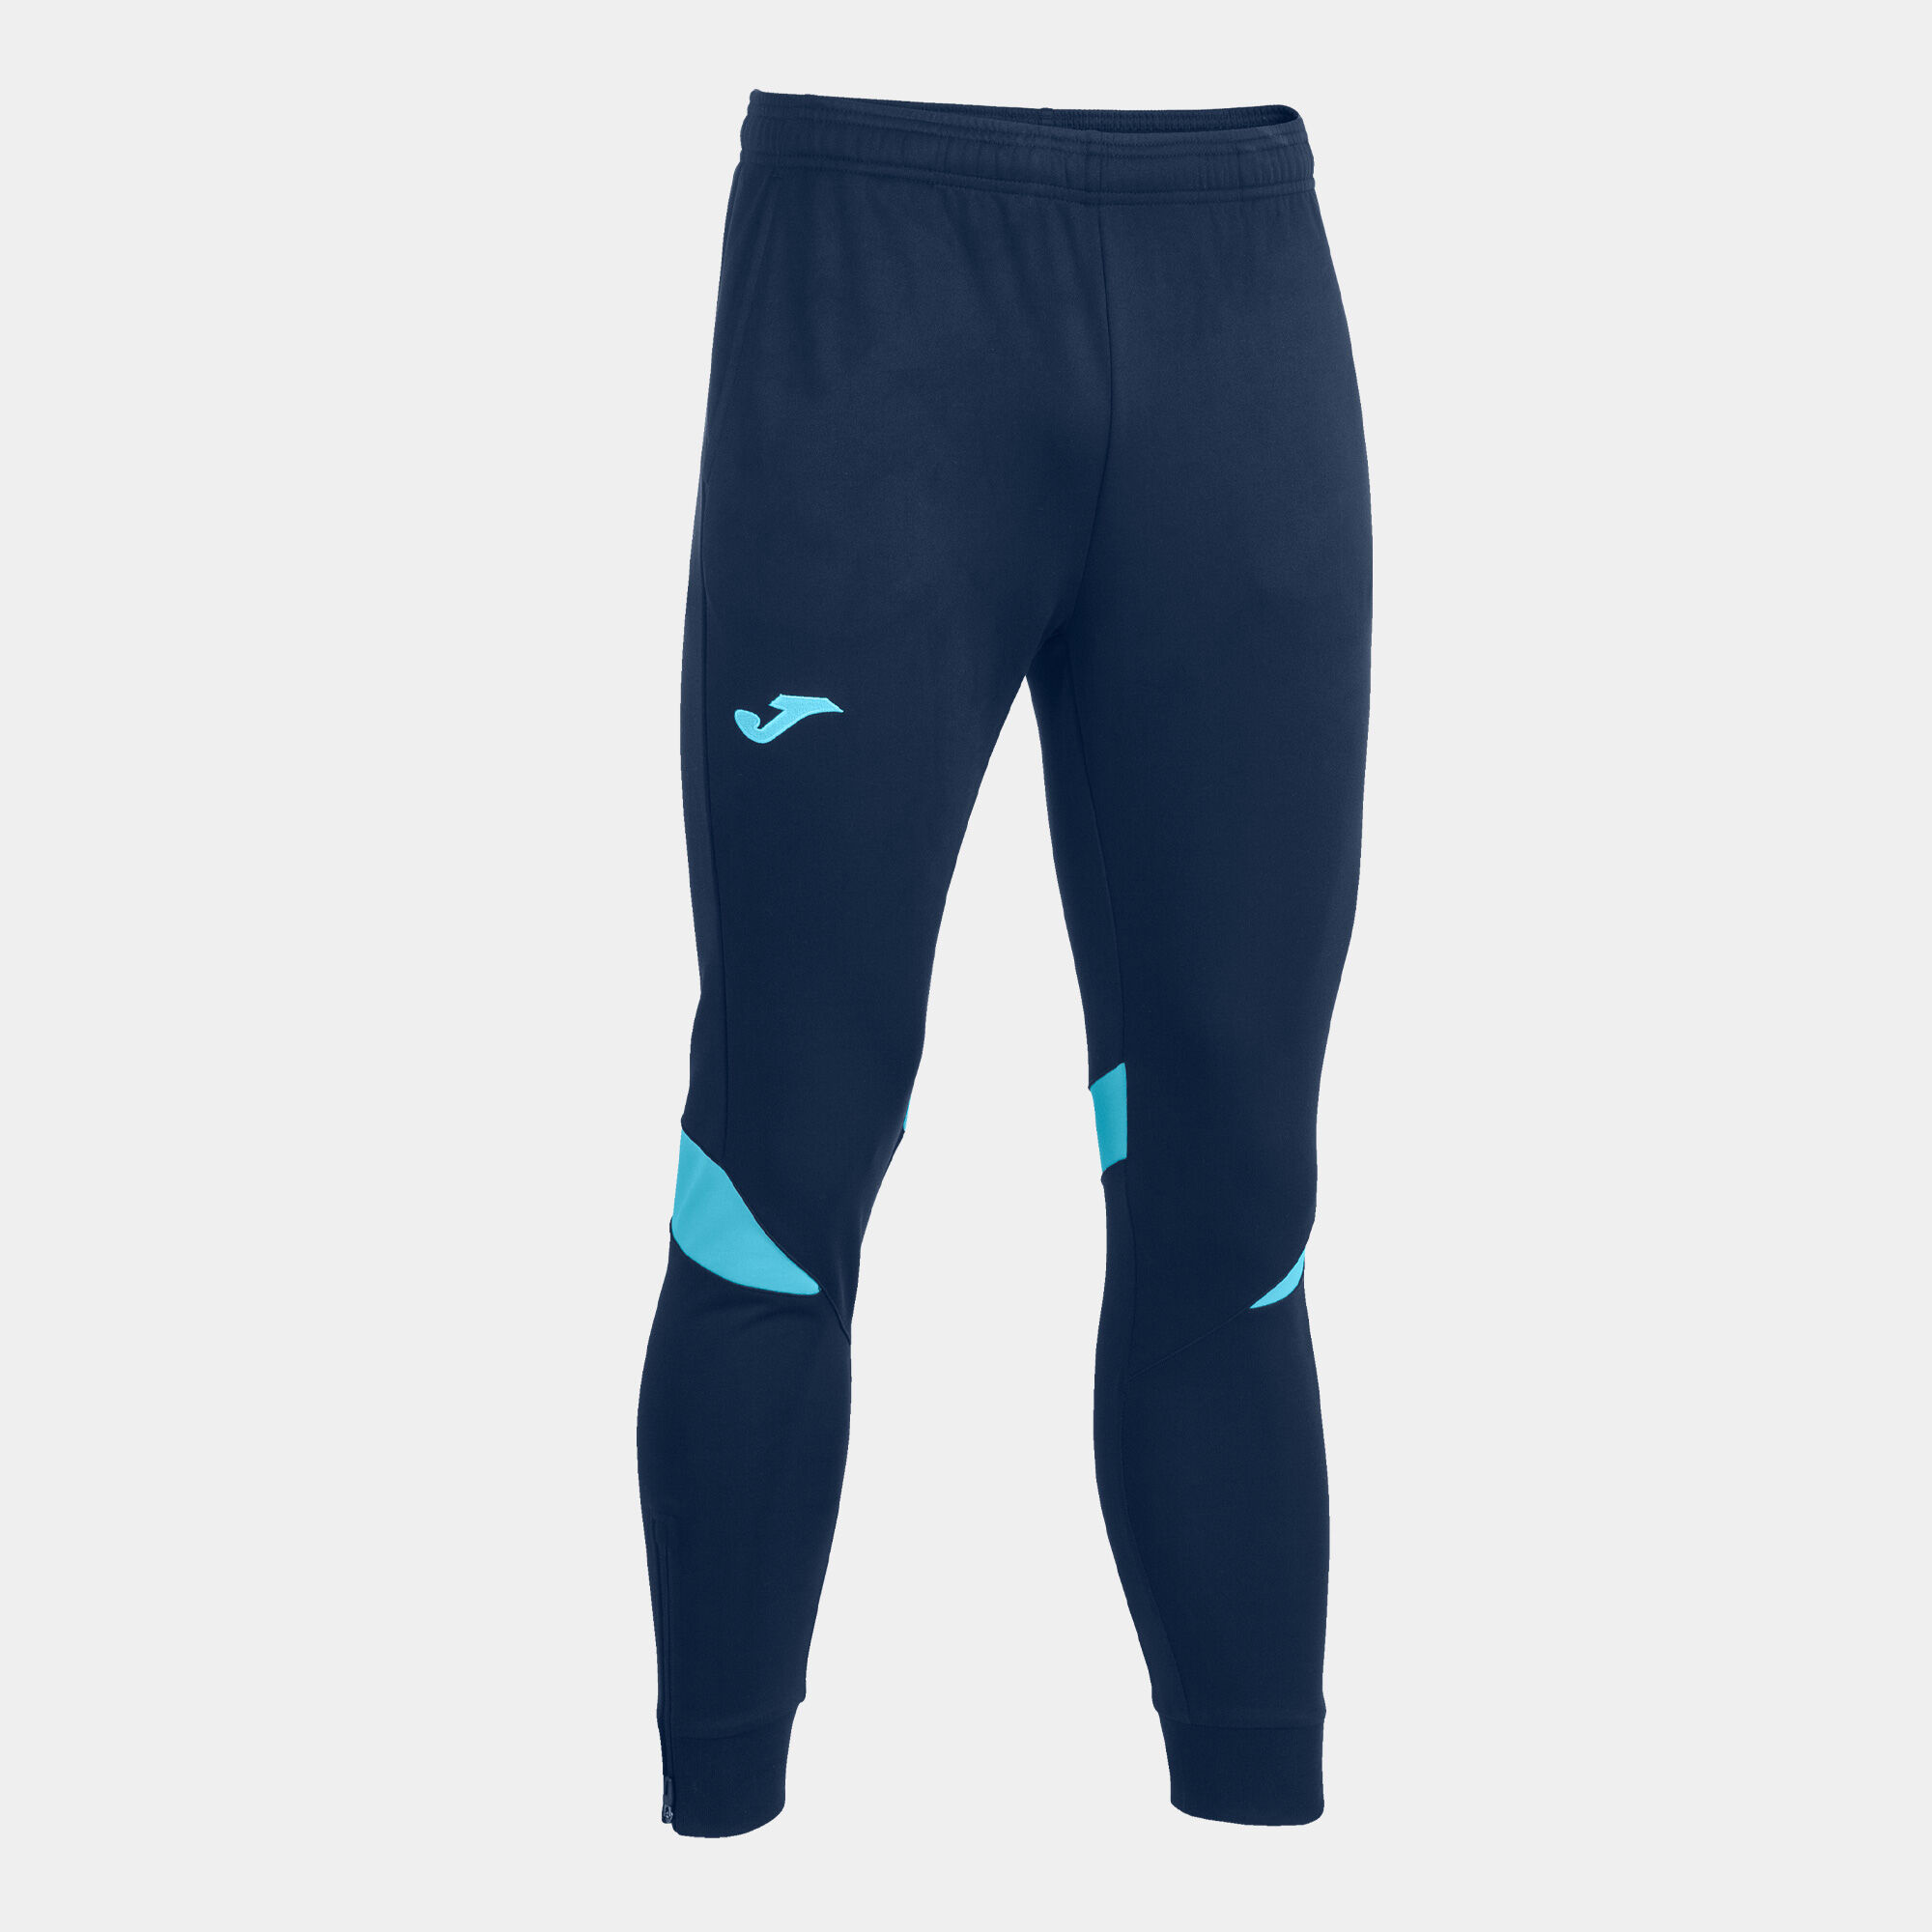 Longs pants man Championship VI navy blue fluorescent turquoise